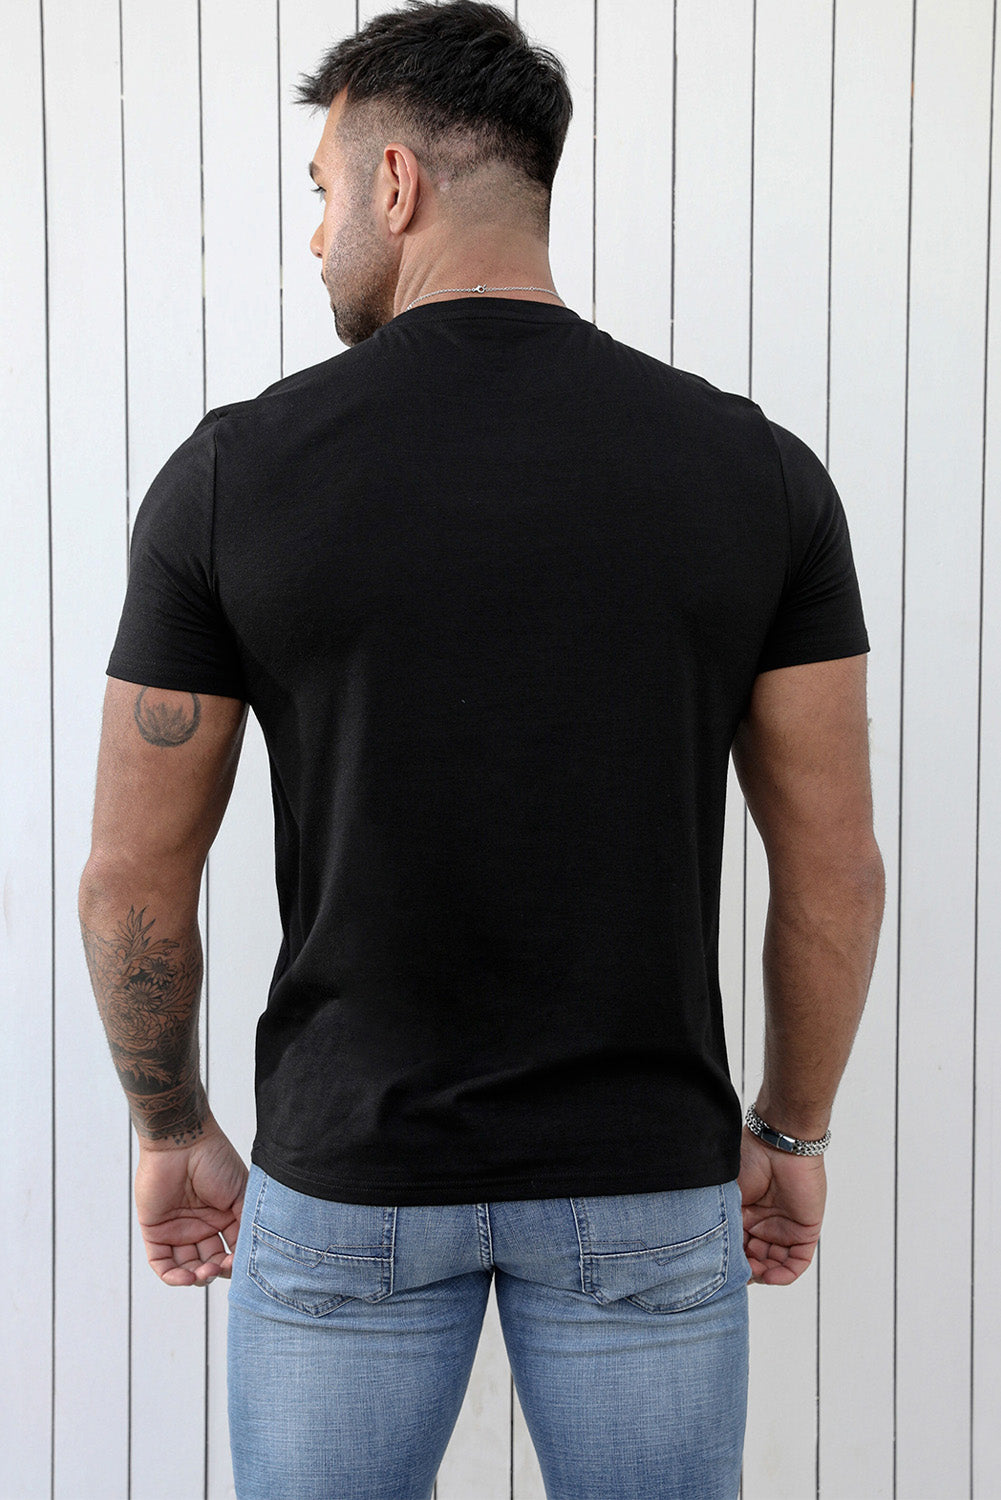 Black TWO BEER Skeleton Graphic Print V Neck Men's T Shirt Men's Tops JT's Designer Fashion